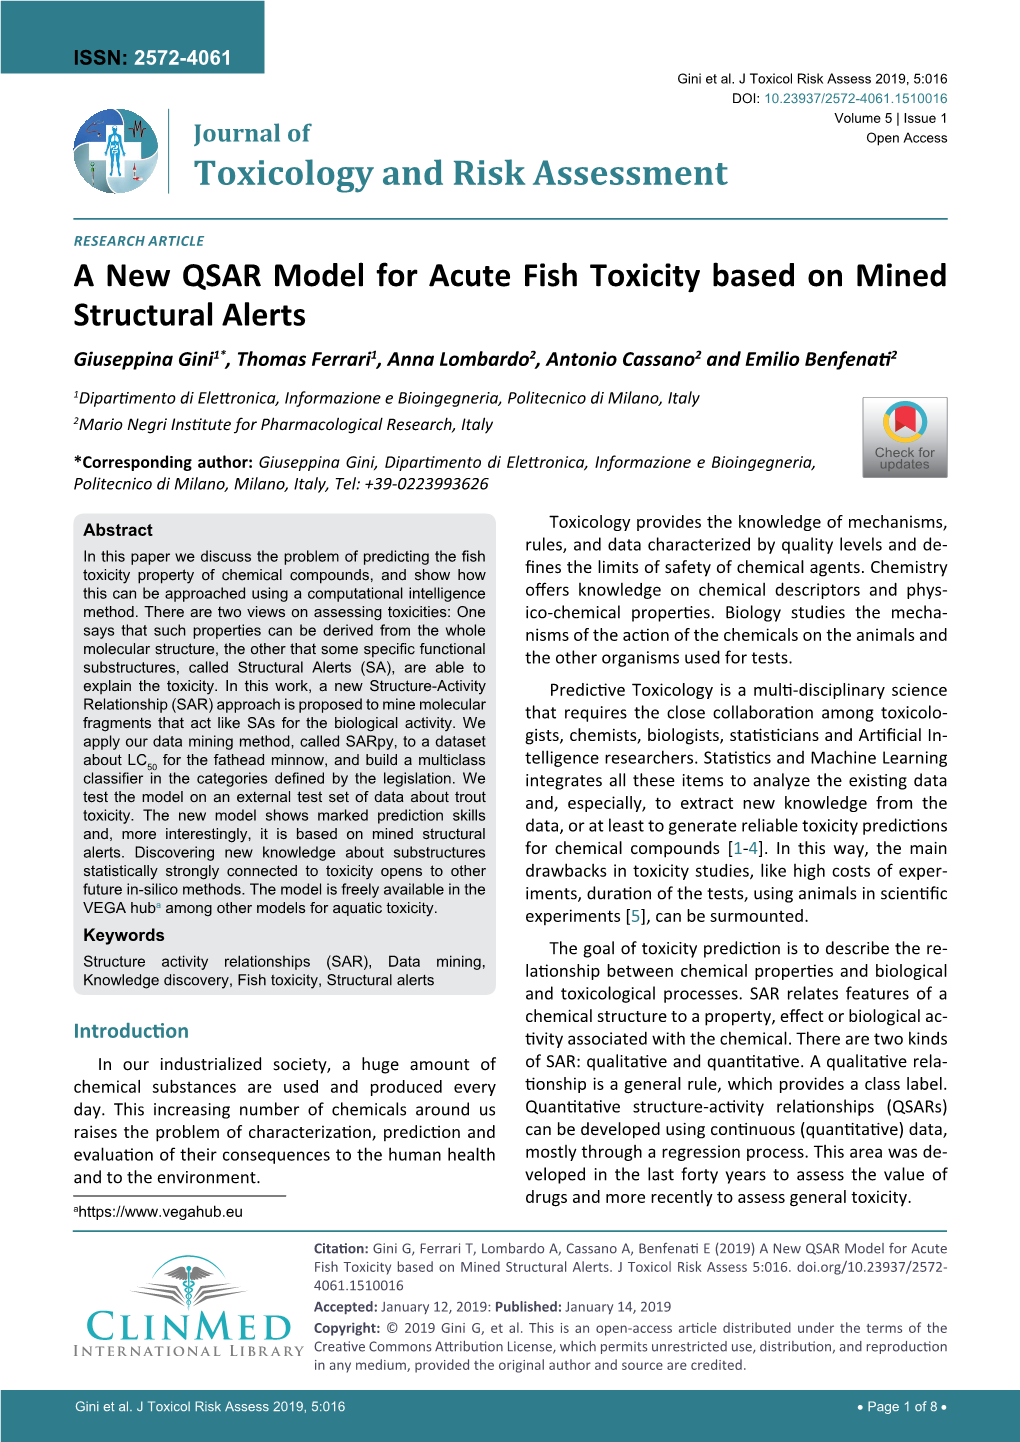 A New QSAR Model for Acute Fish Toxicity Based on Mined Structural Alerts Giuseppina Gini1*, Thomas Ferrari1, Anna Lombardo2, Antonio Cassano2 and Emilio Benfenati2